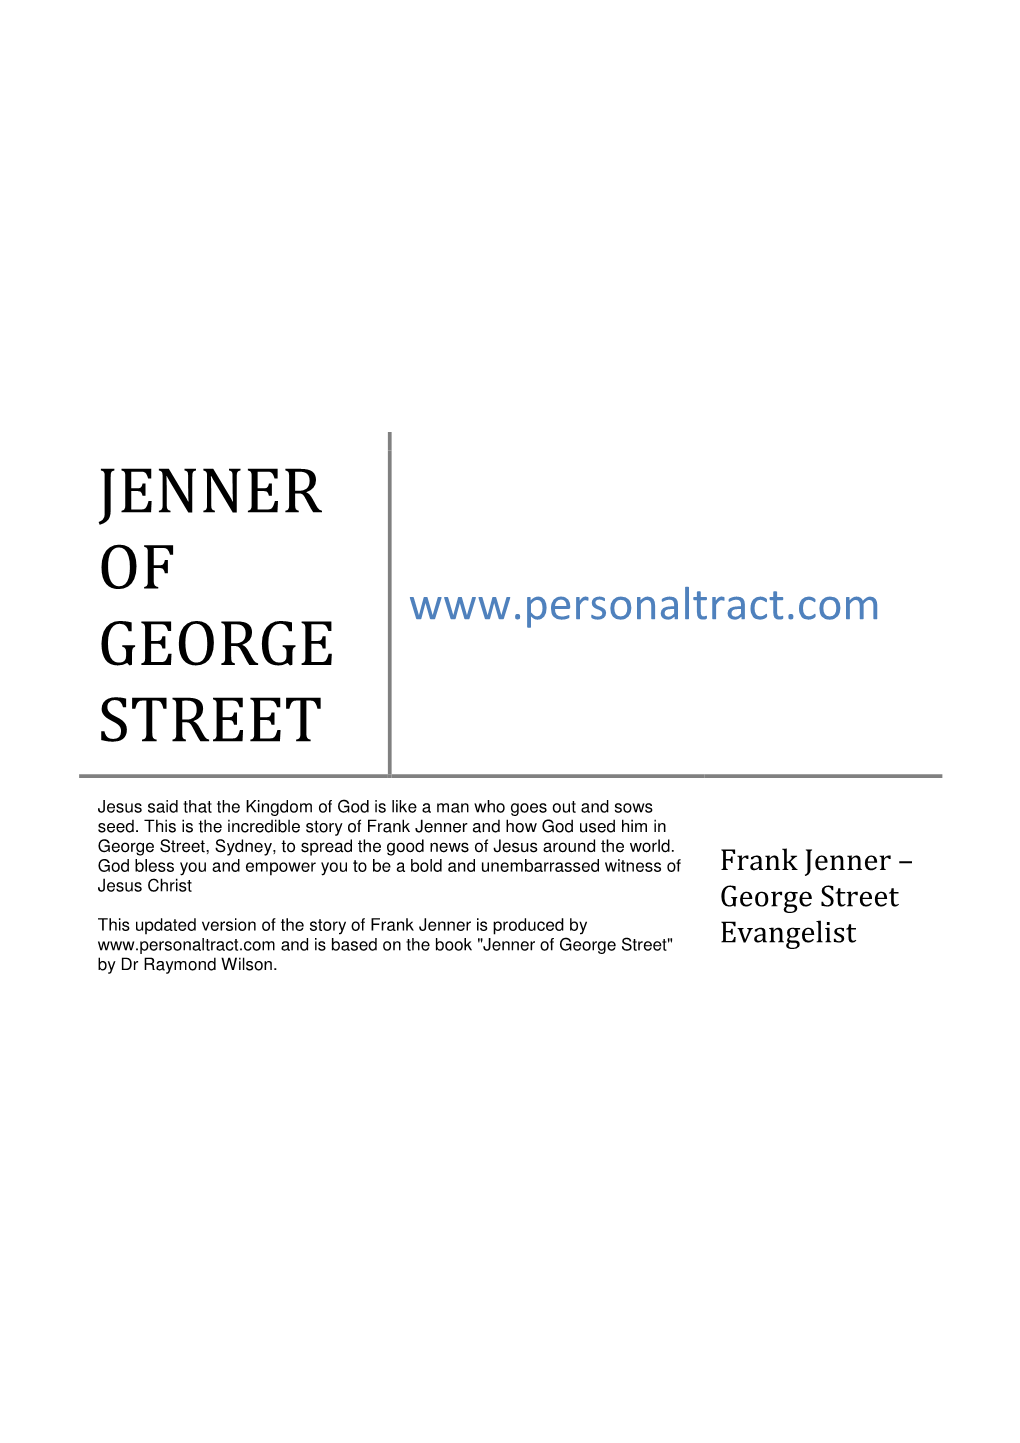 Jenner of George Street" Evangelist by Dr Raymond Wilson